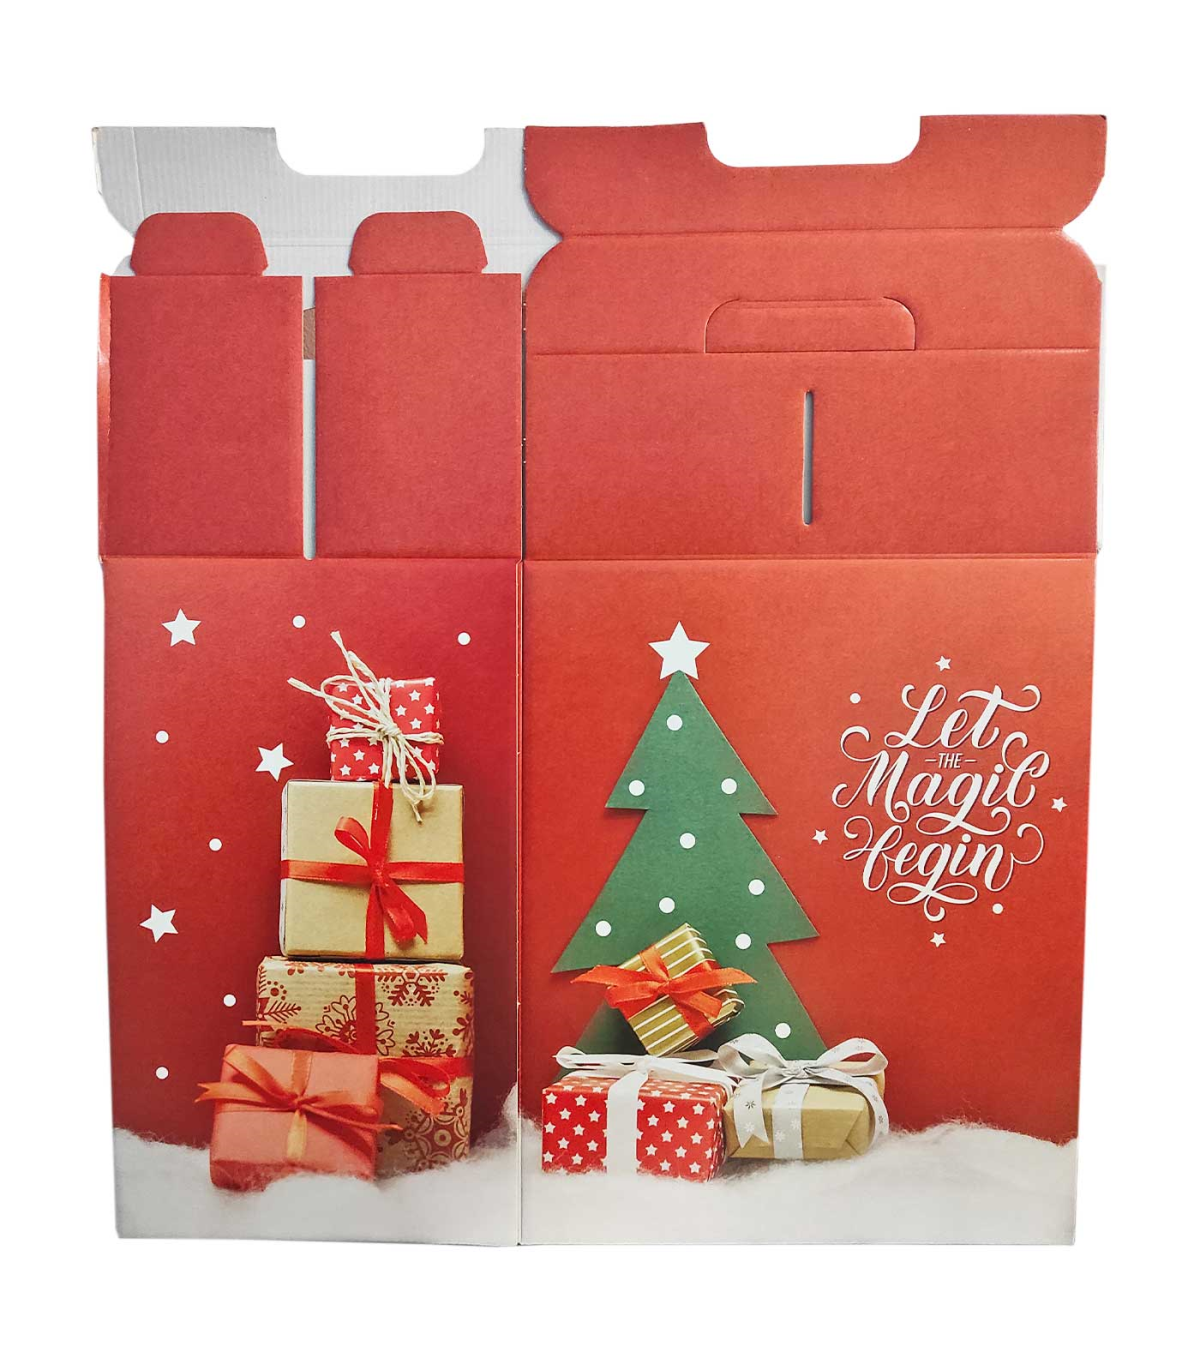 Set de 2 cajas navideñas de cartón, plegables, para regalos o